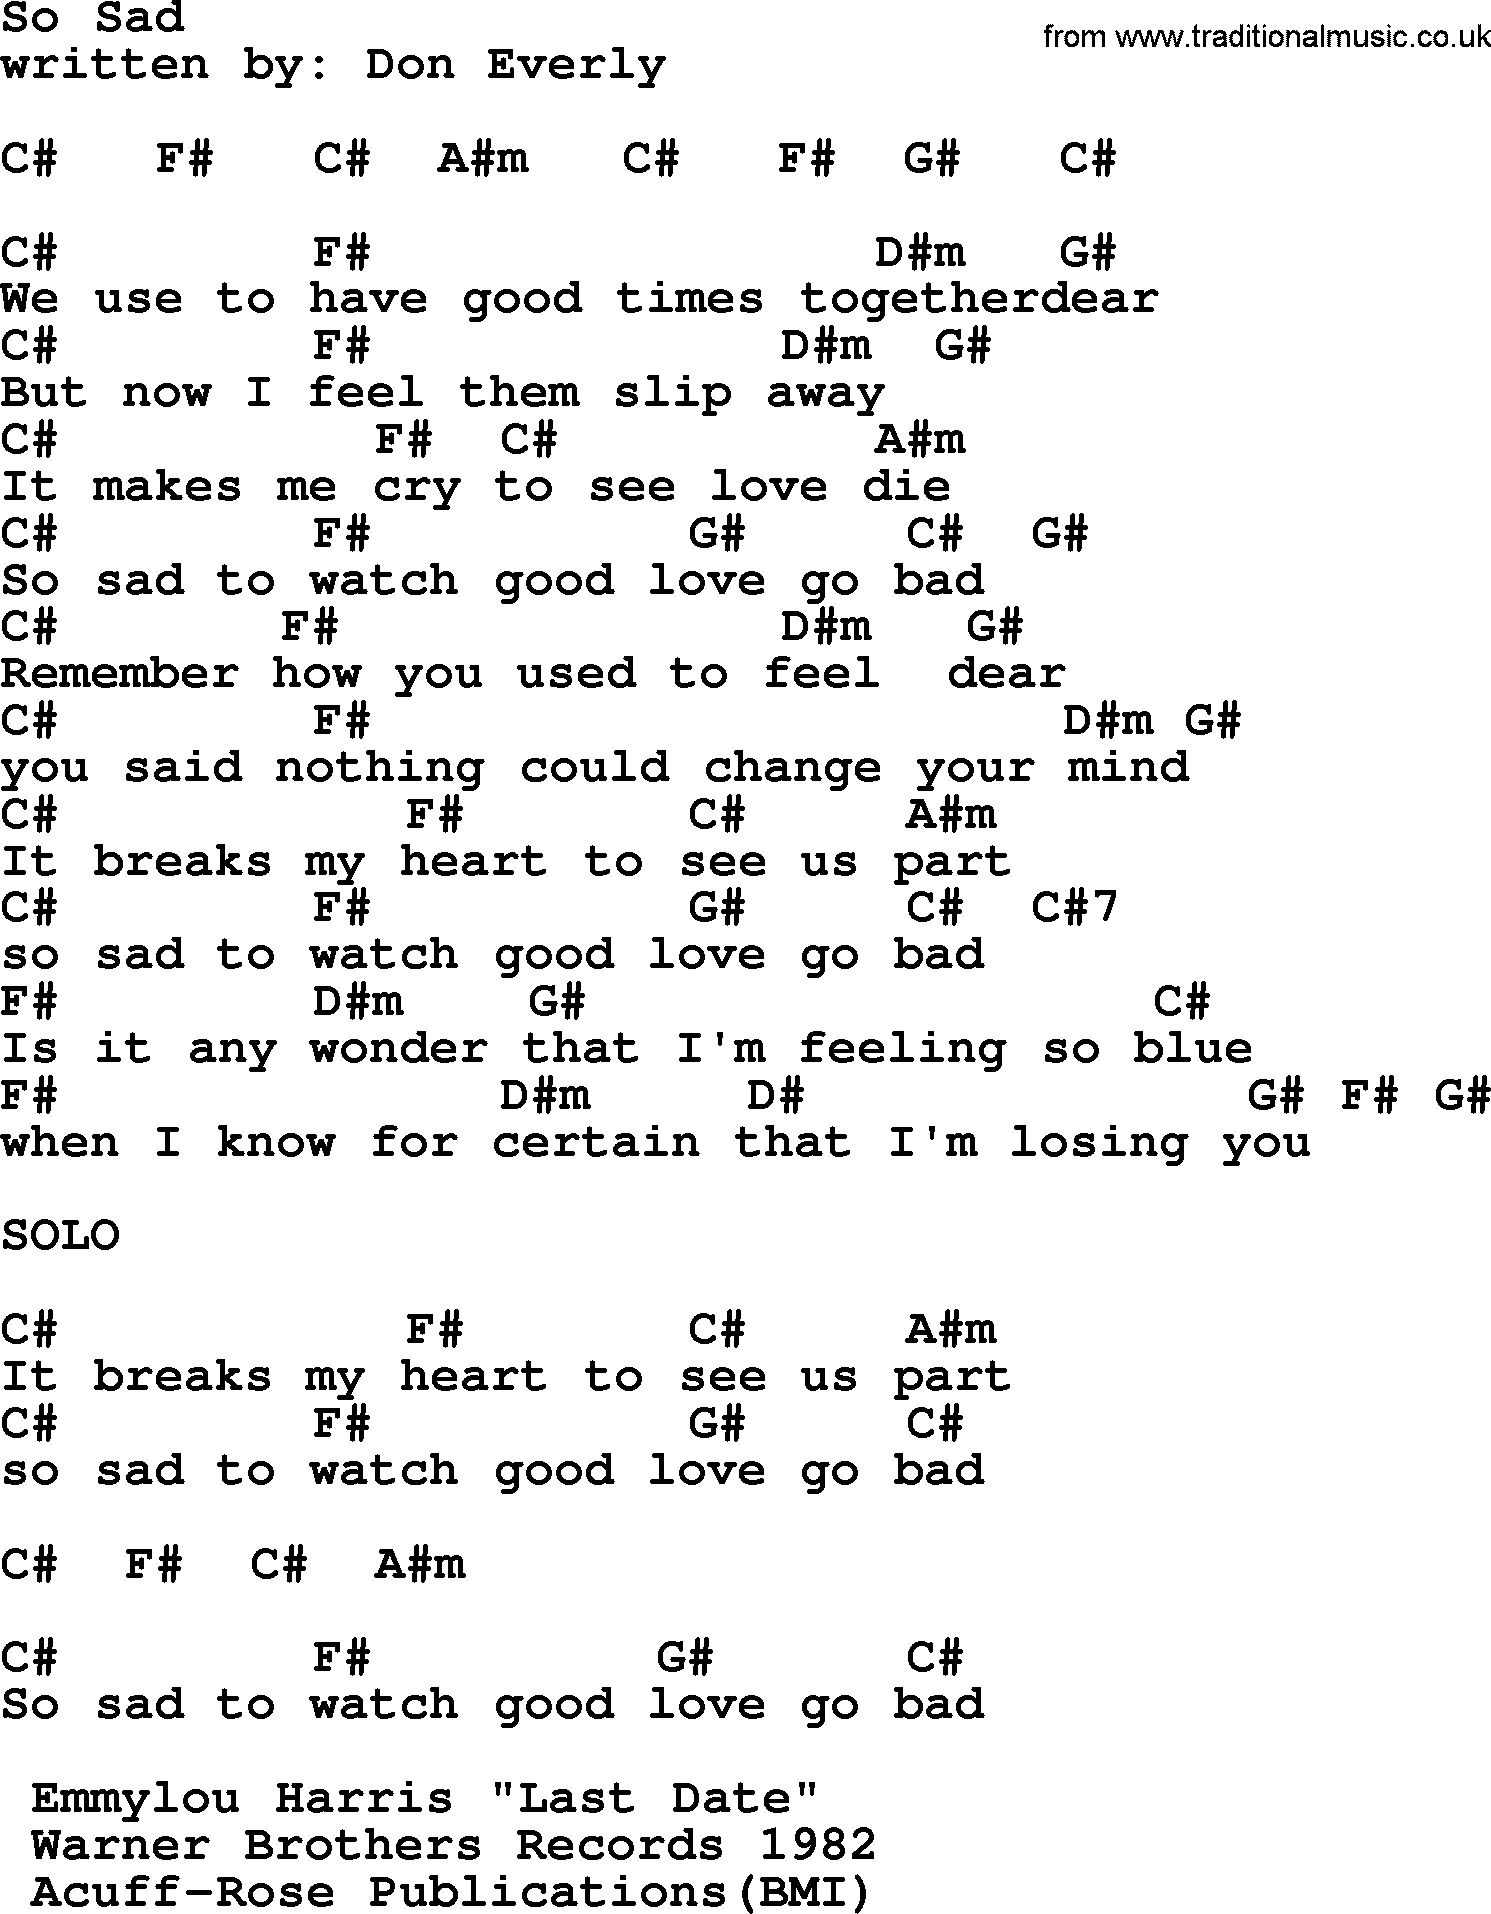 Emmylou Harris song: So Sad lyrics and chords